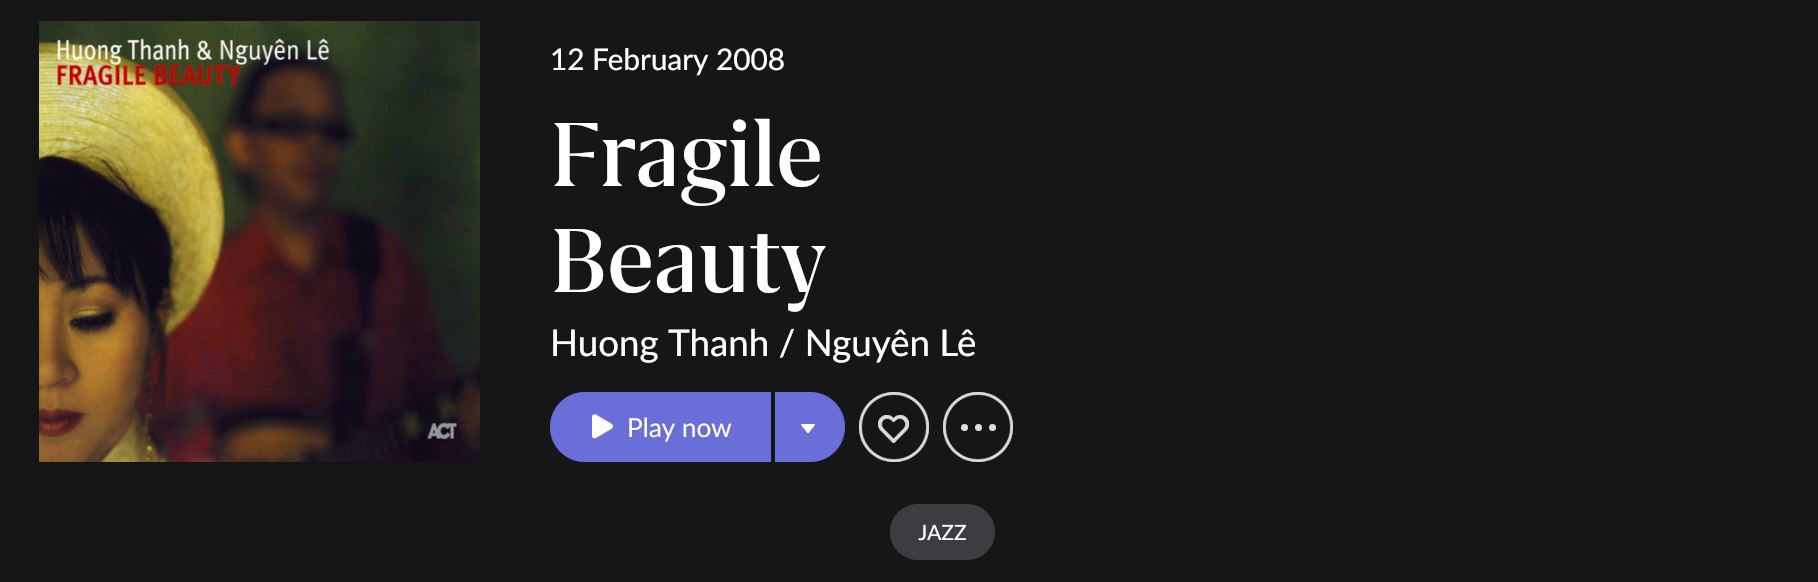 tinhte_huong_thanh_nguyen_le_fragile_beauty.JPG